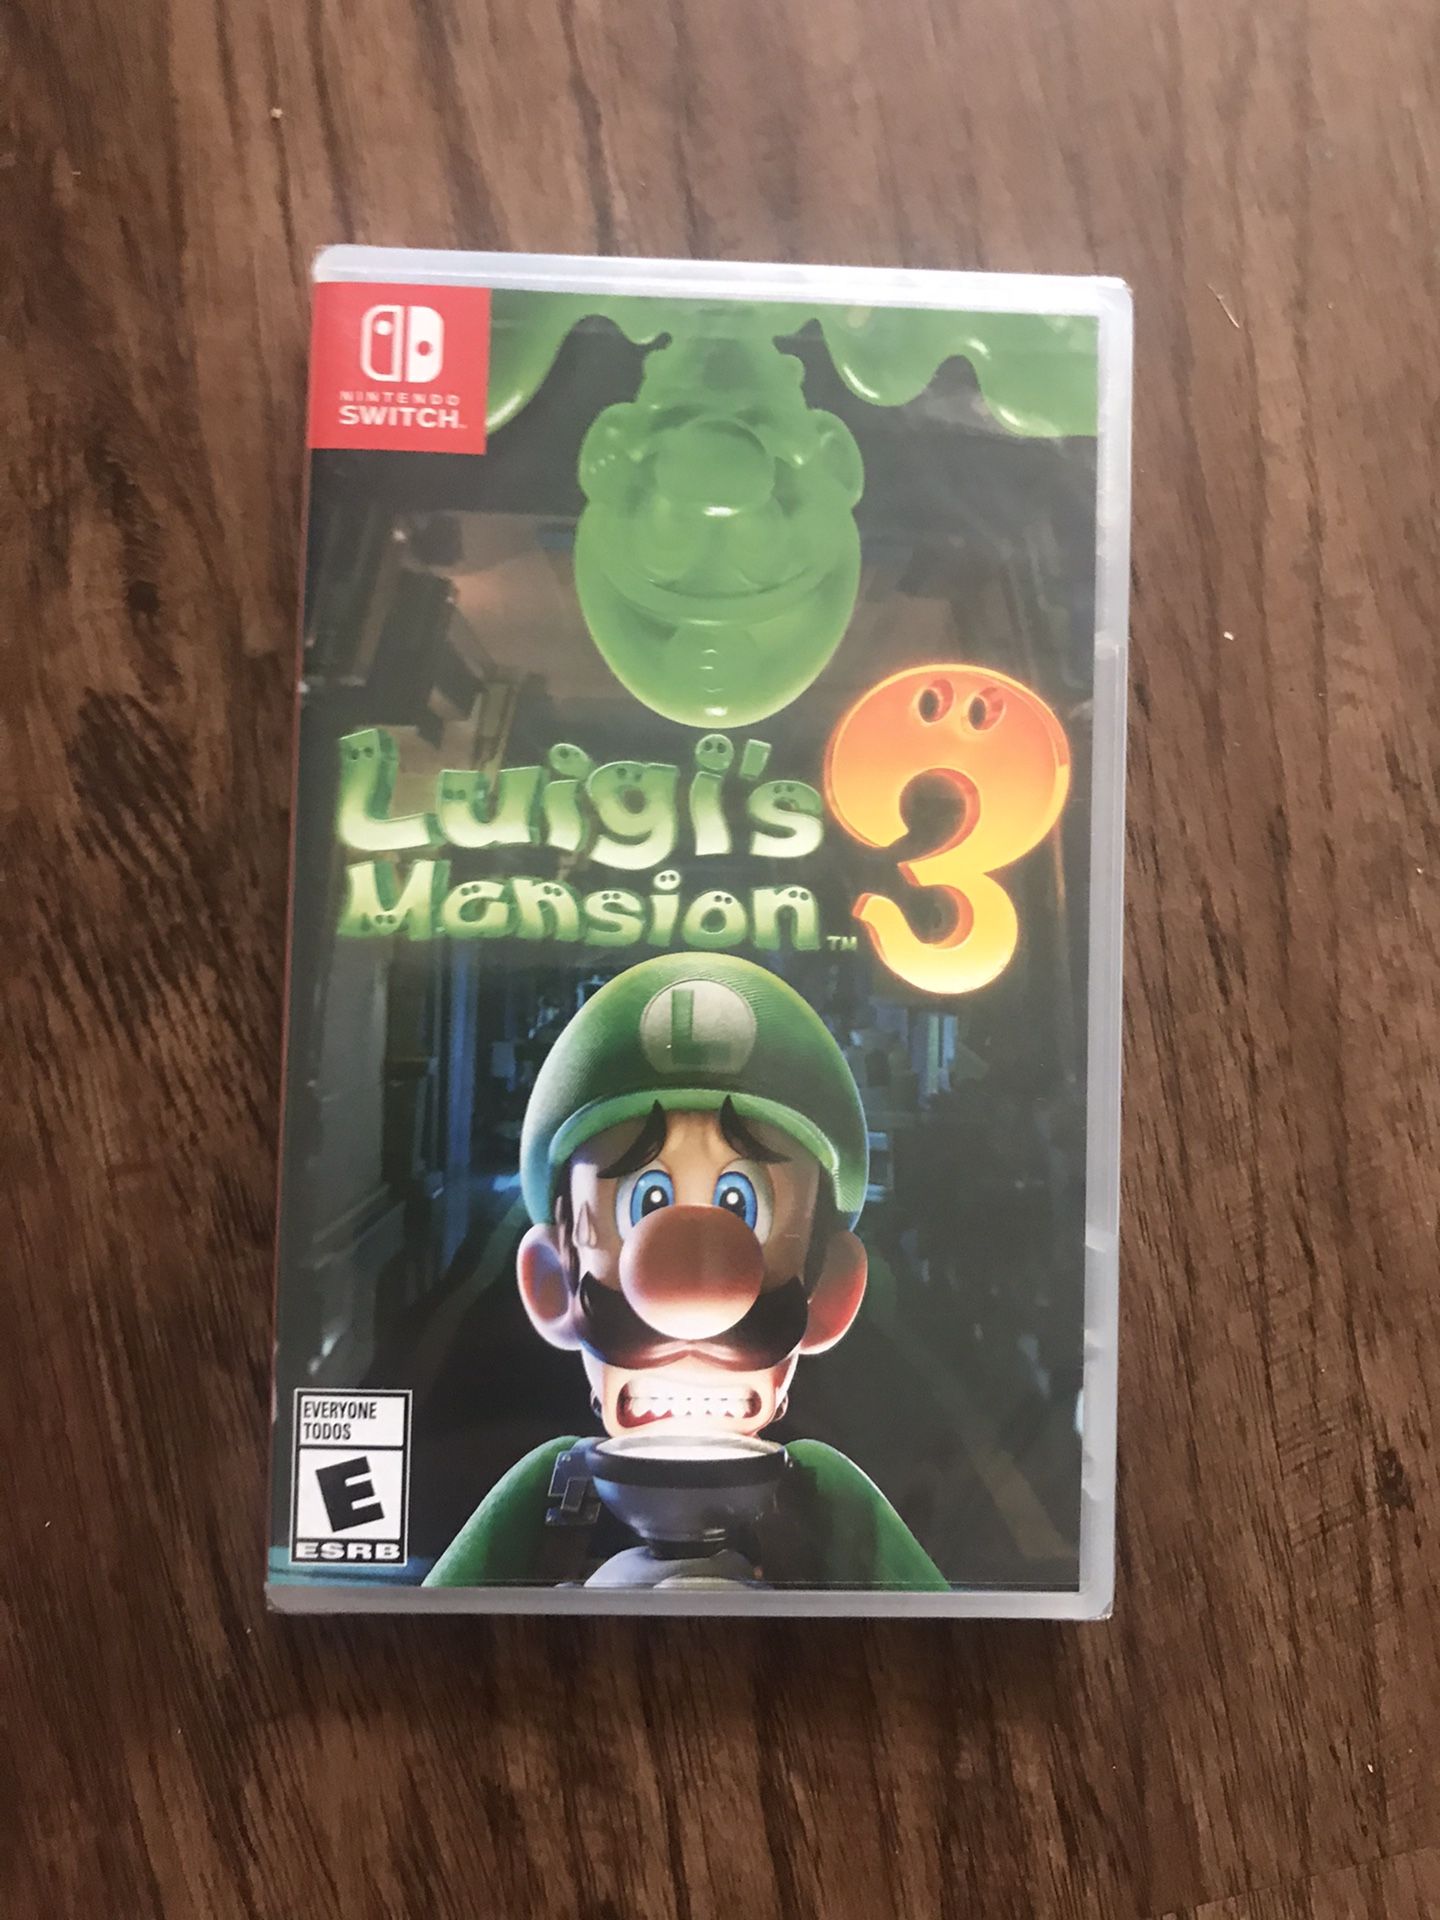 Luigi mansion 3 for Nintendo Switch never open never used